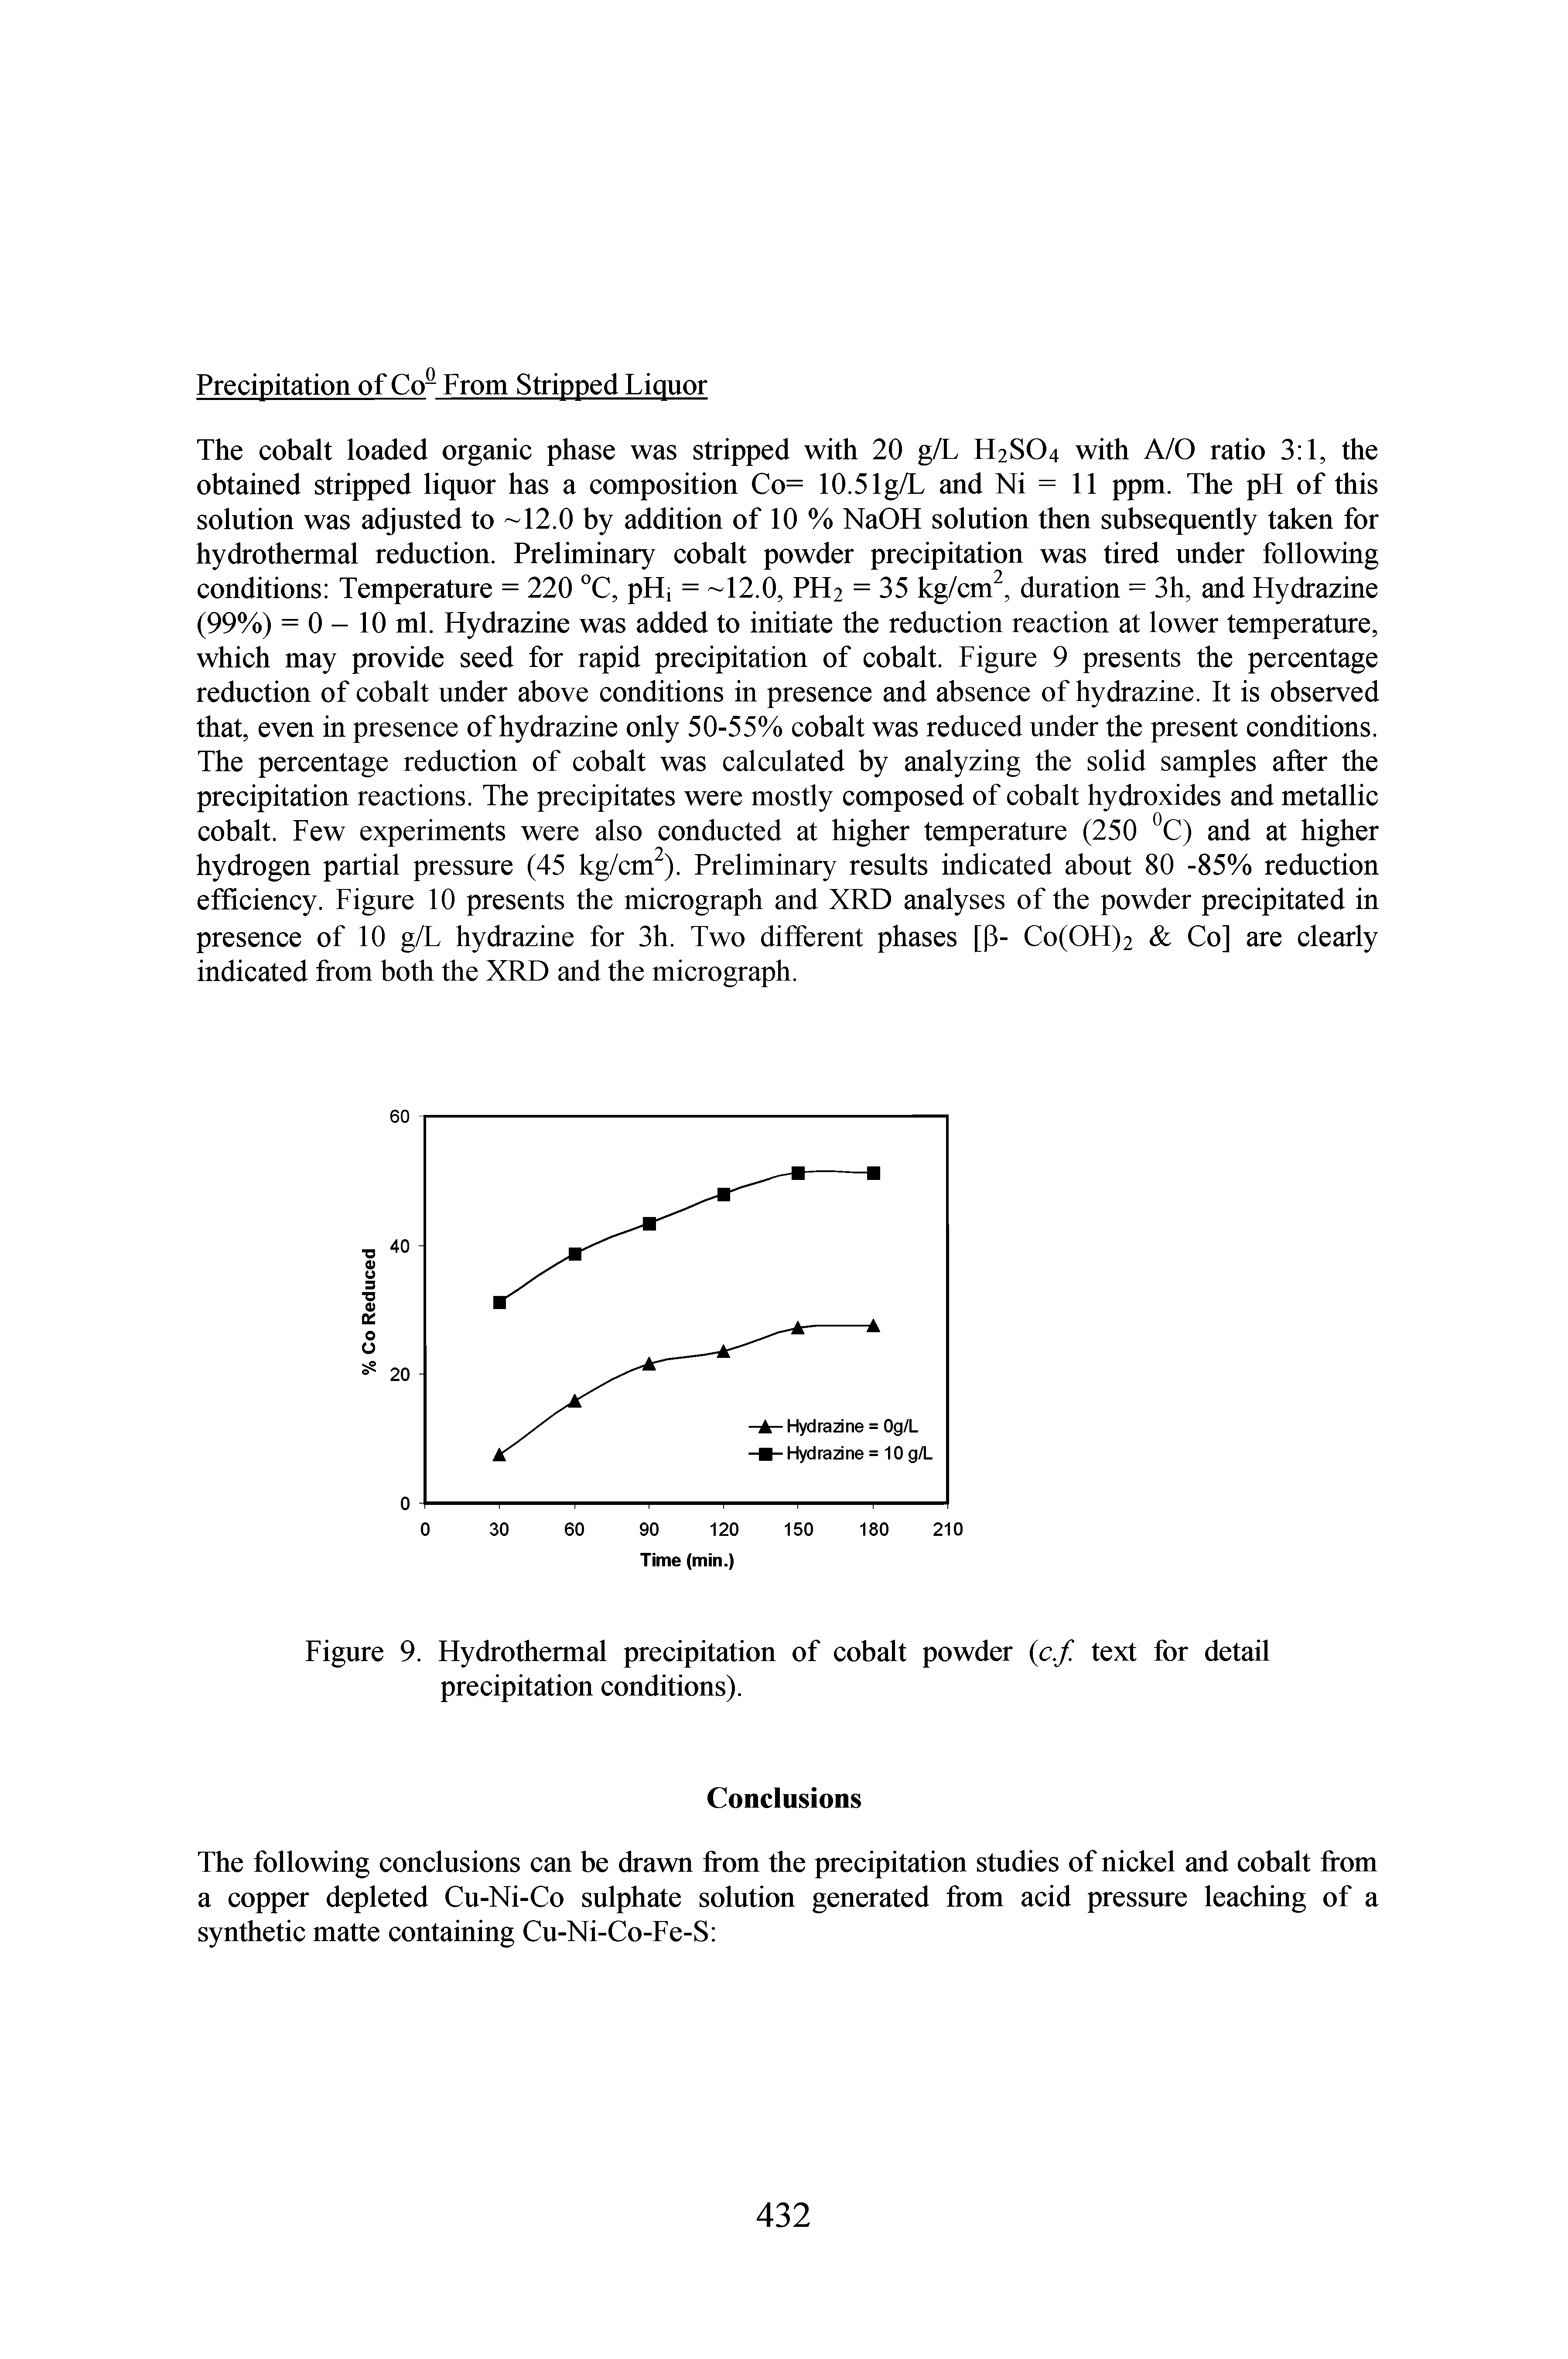 Figure 9. Hydrothermal precipitation of cobalt powder c.f. text for detail precipitation conditions).